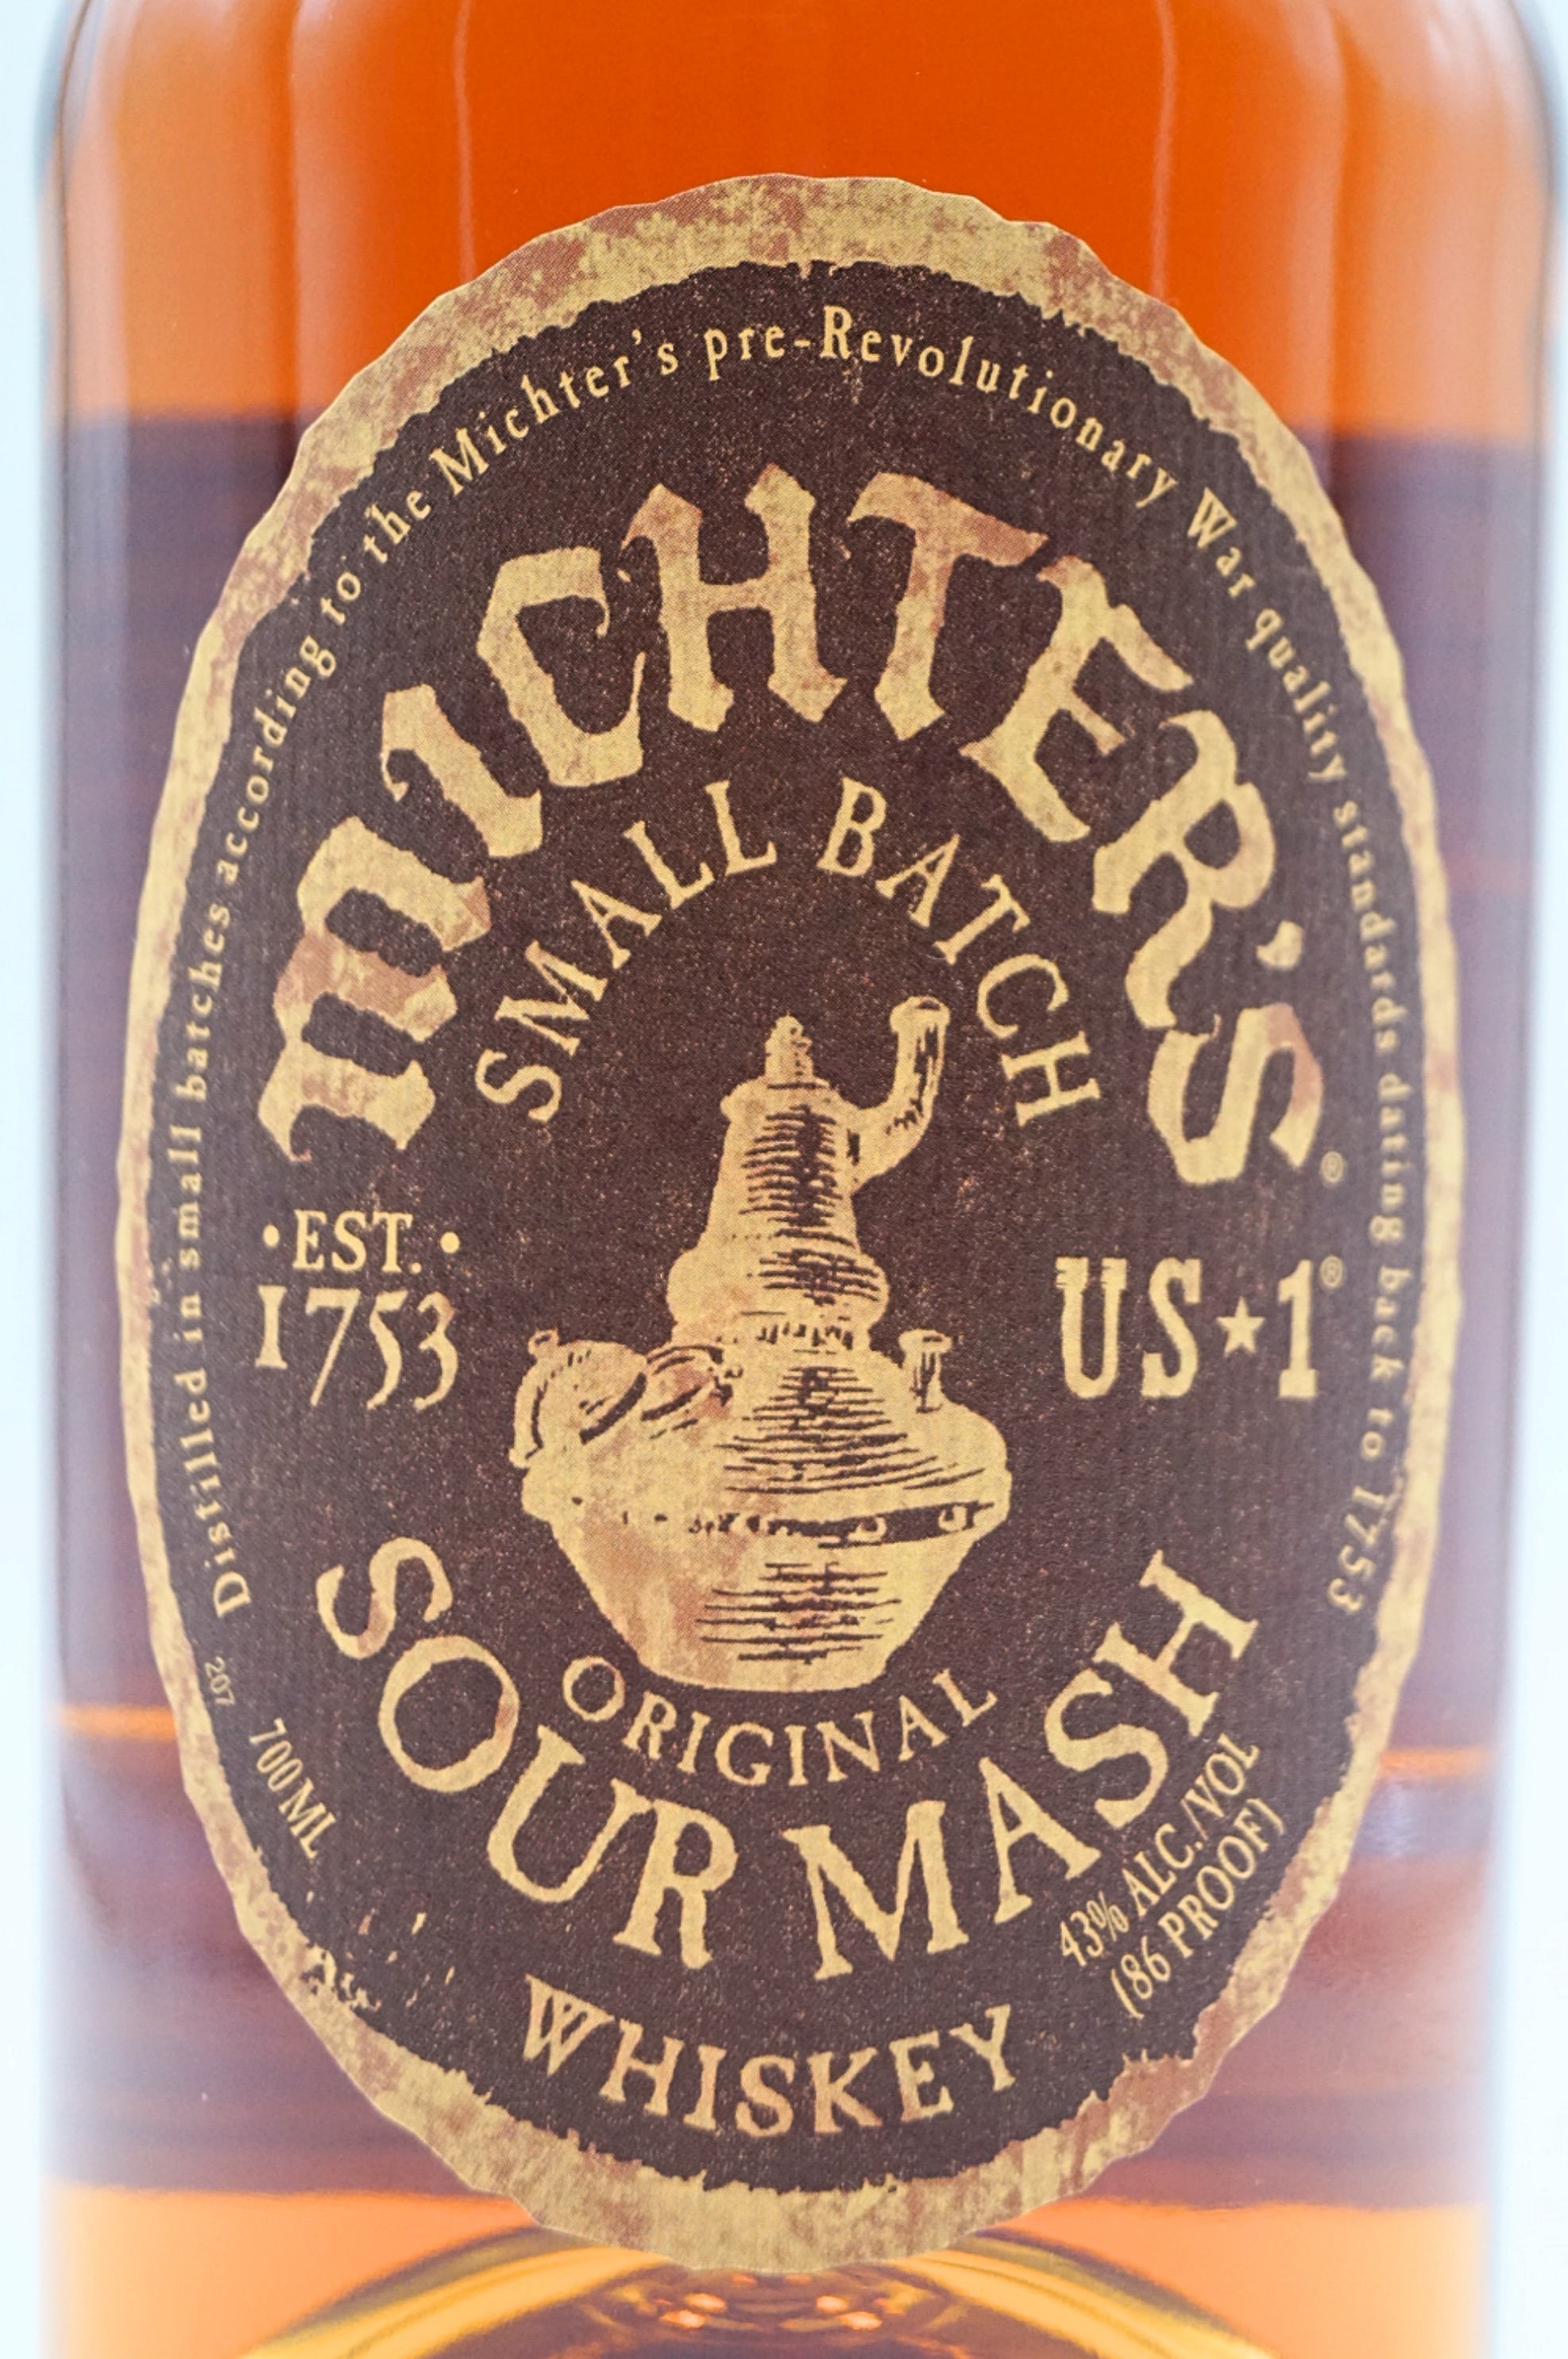 US*1 Original Sour Mash Whiskey